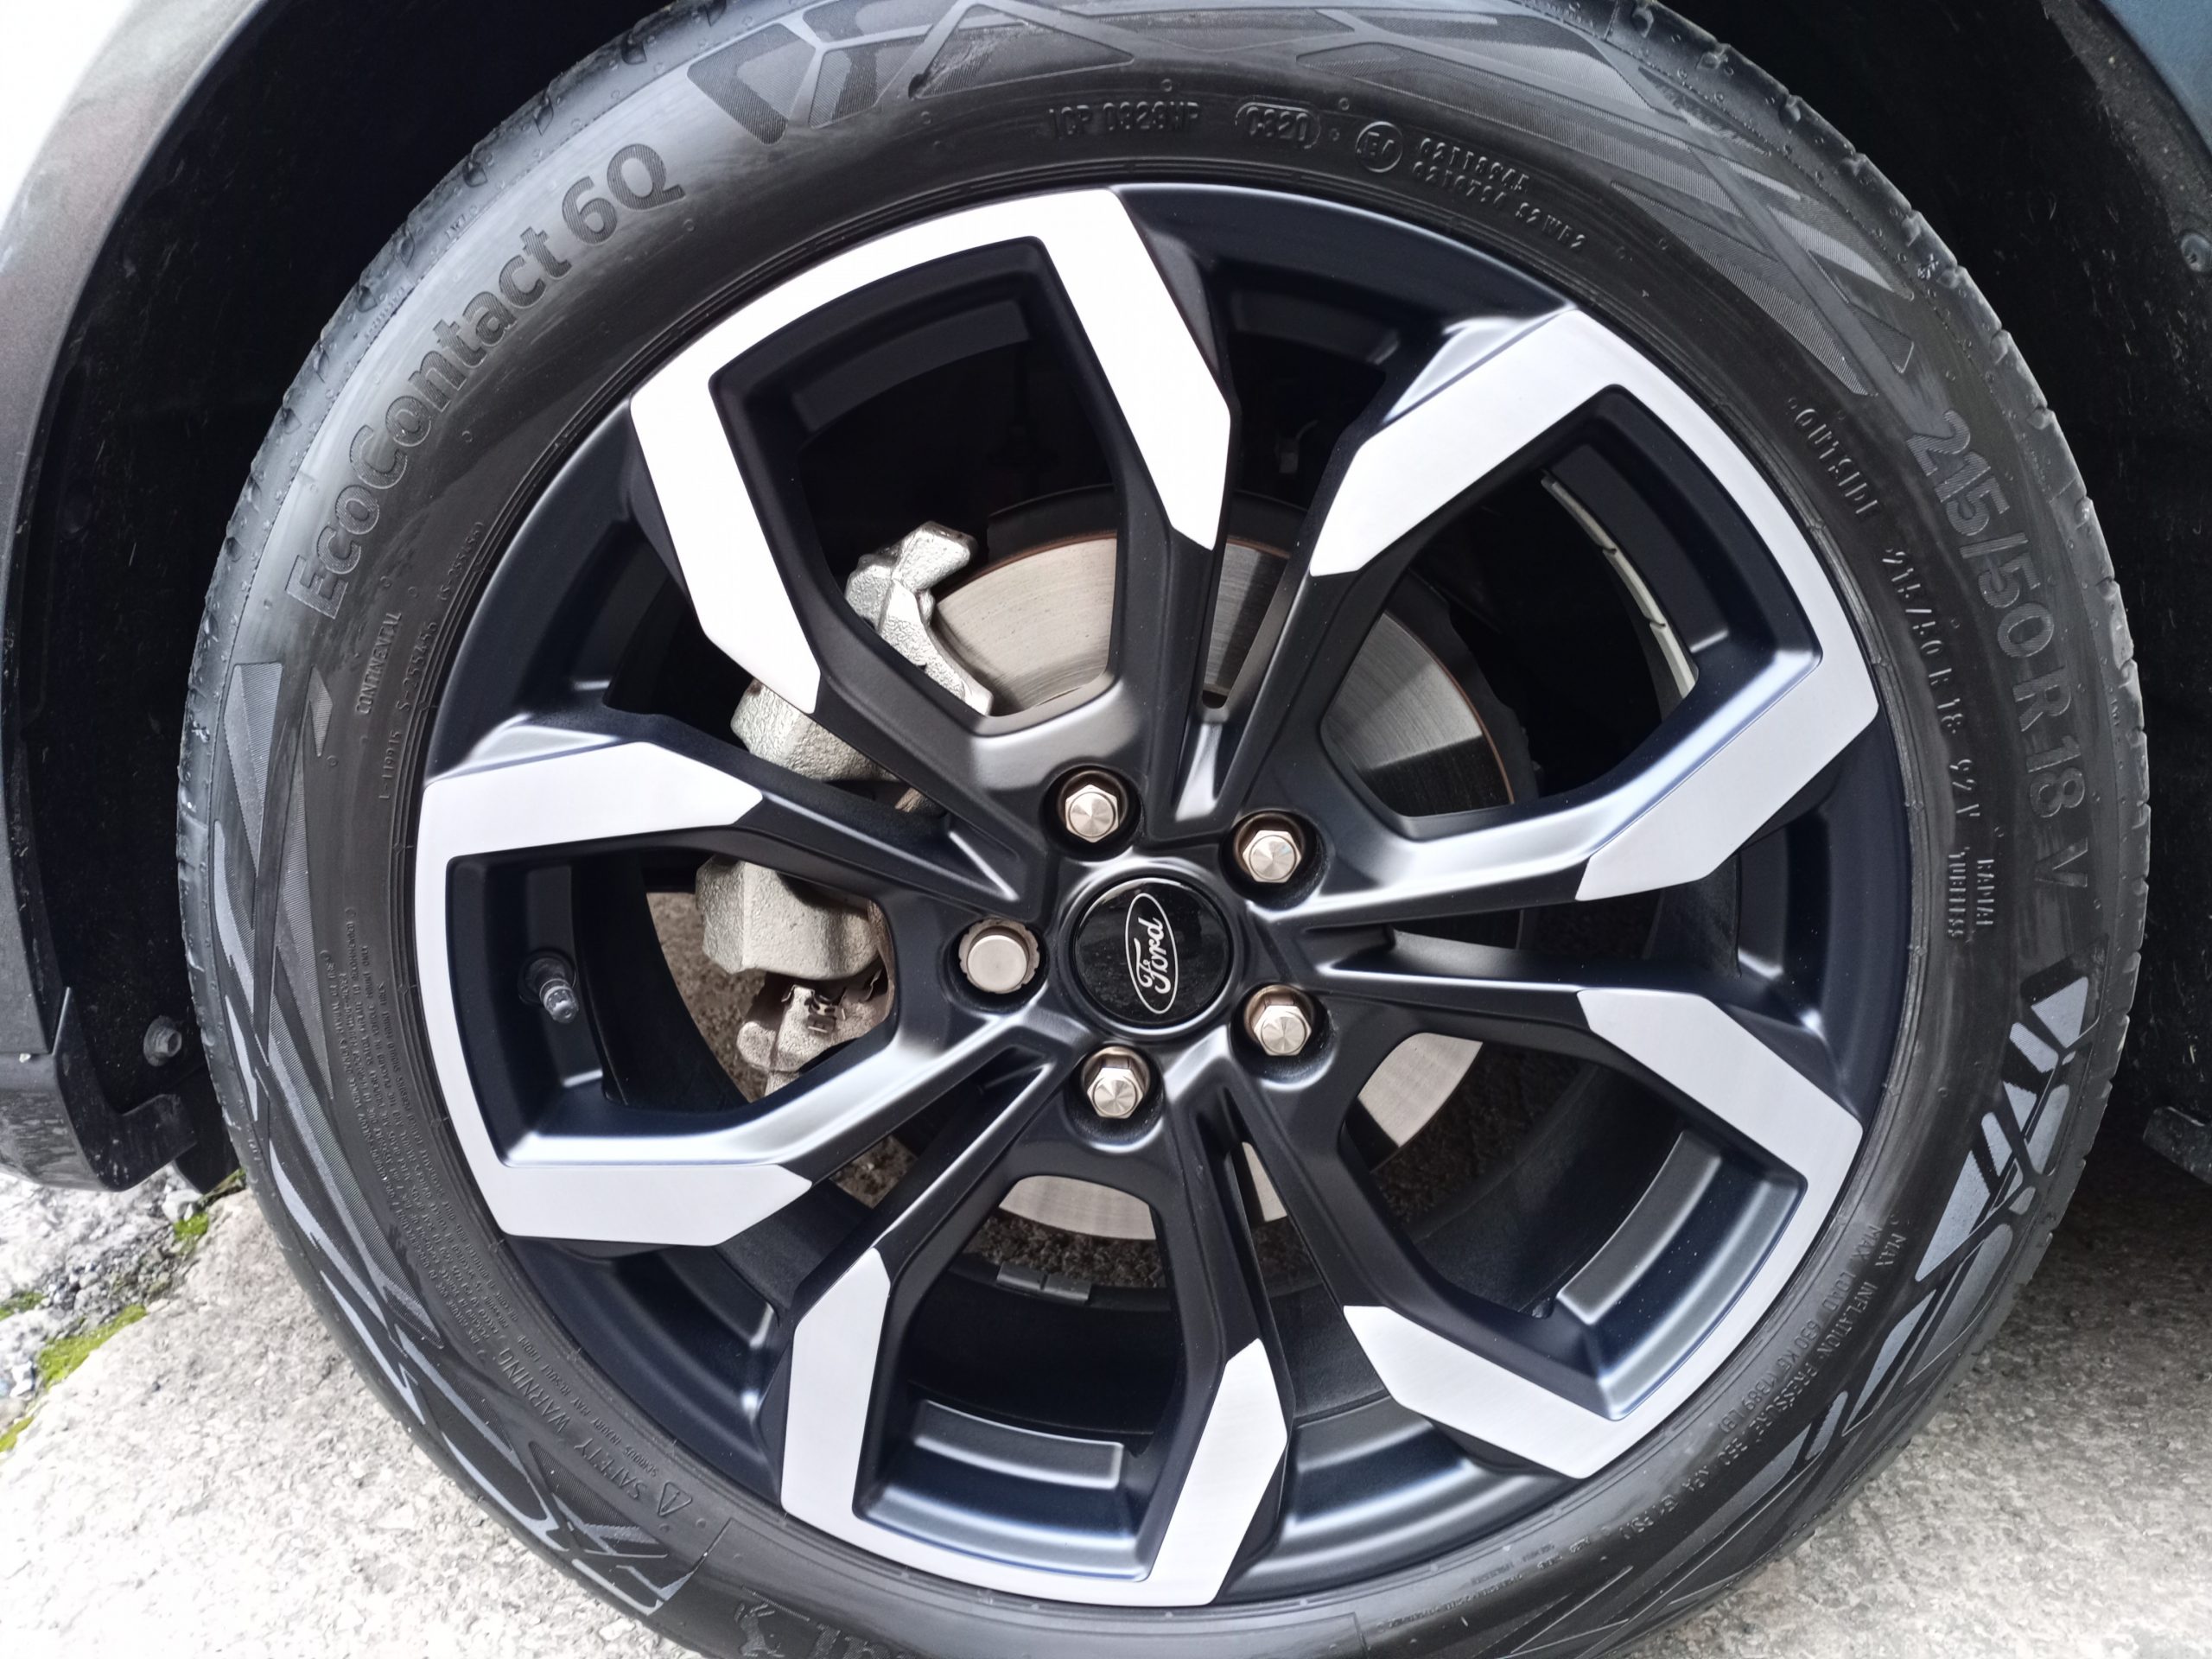 Ford diamond cut alloy wheel repair wakefield after